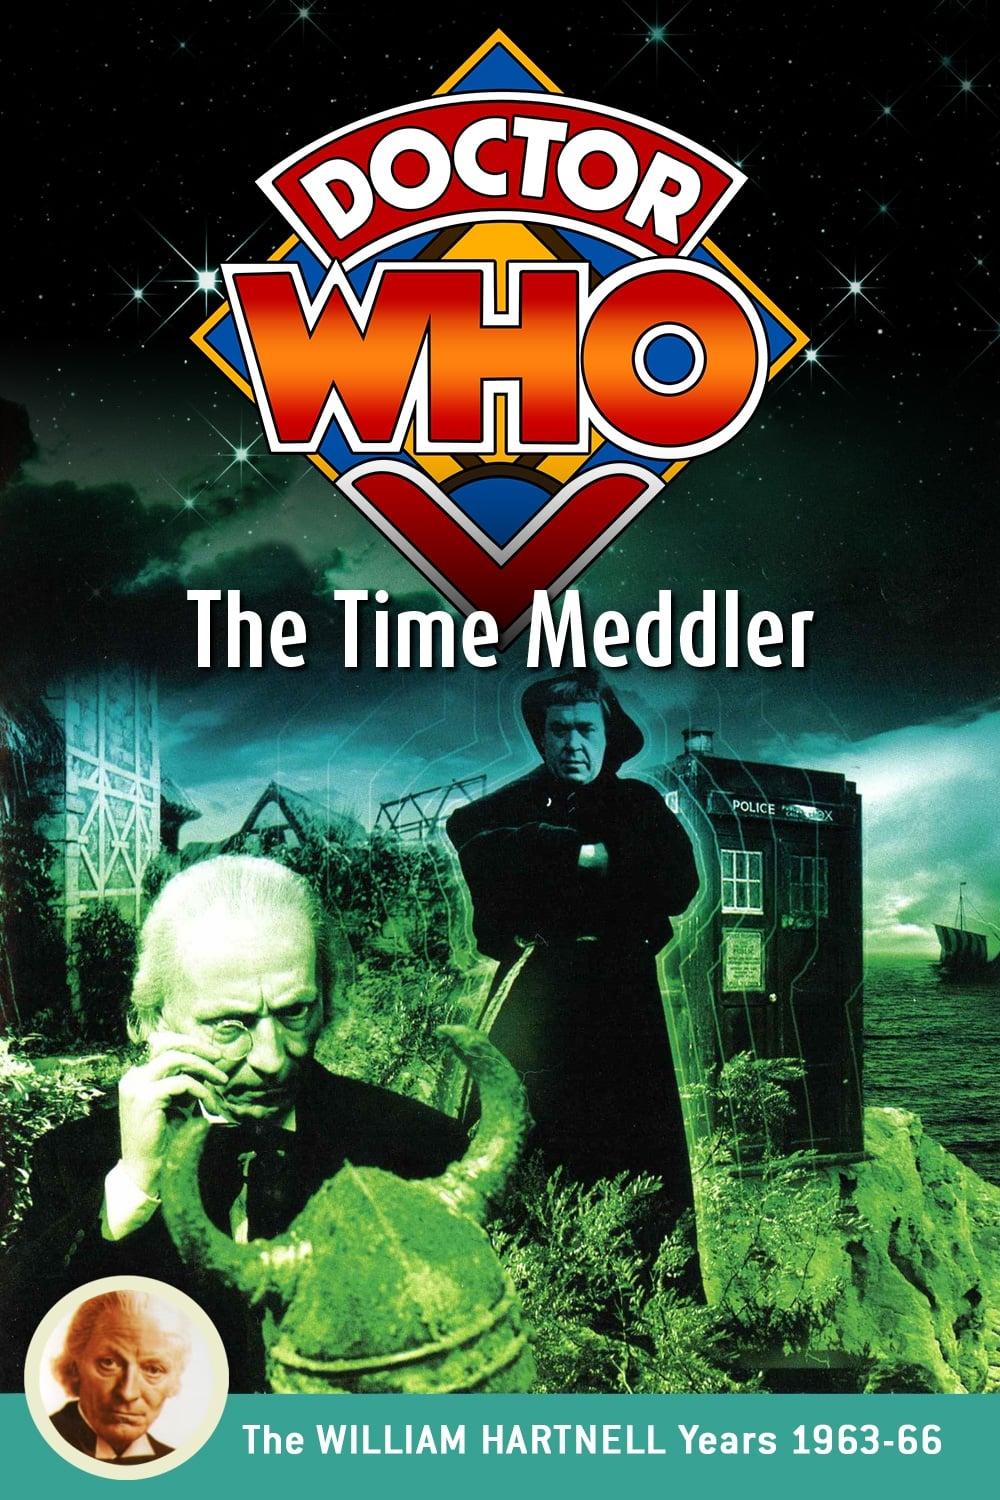 Doctor Who: The Time Meddler poster